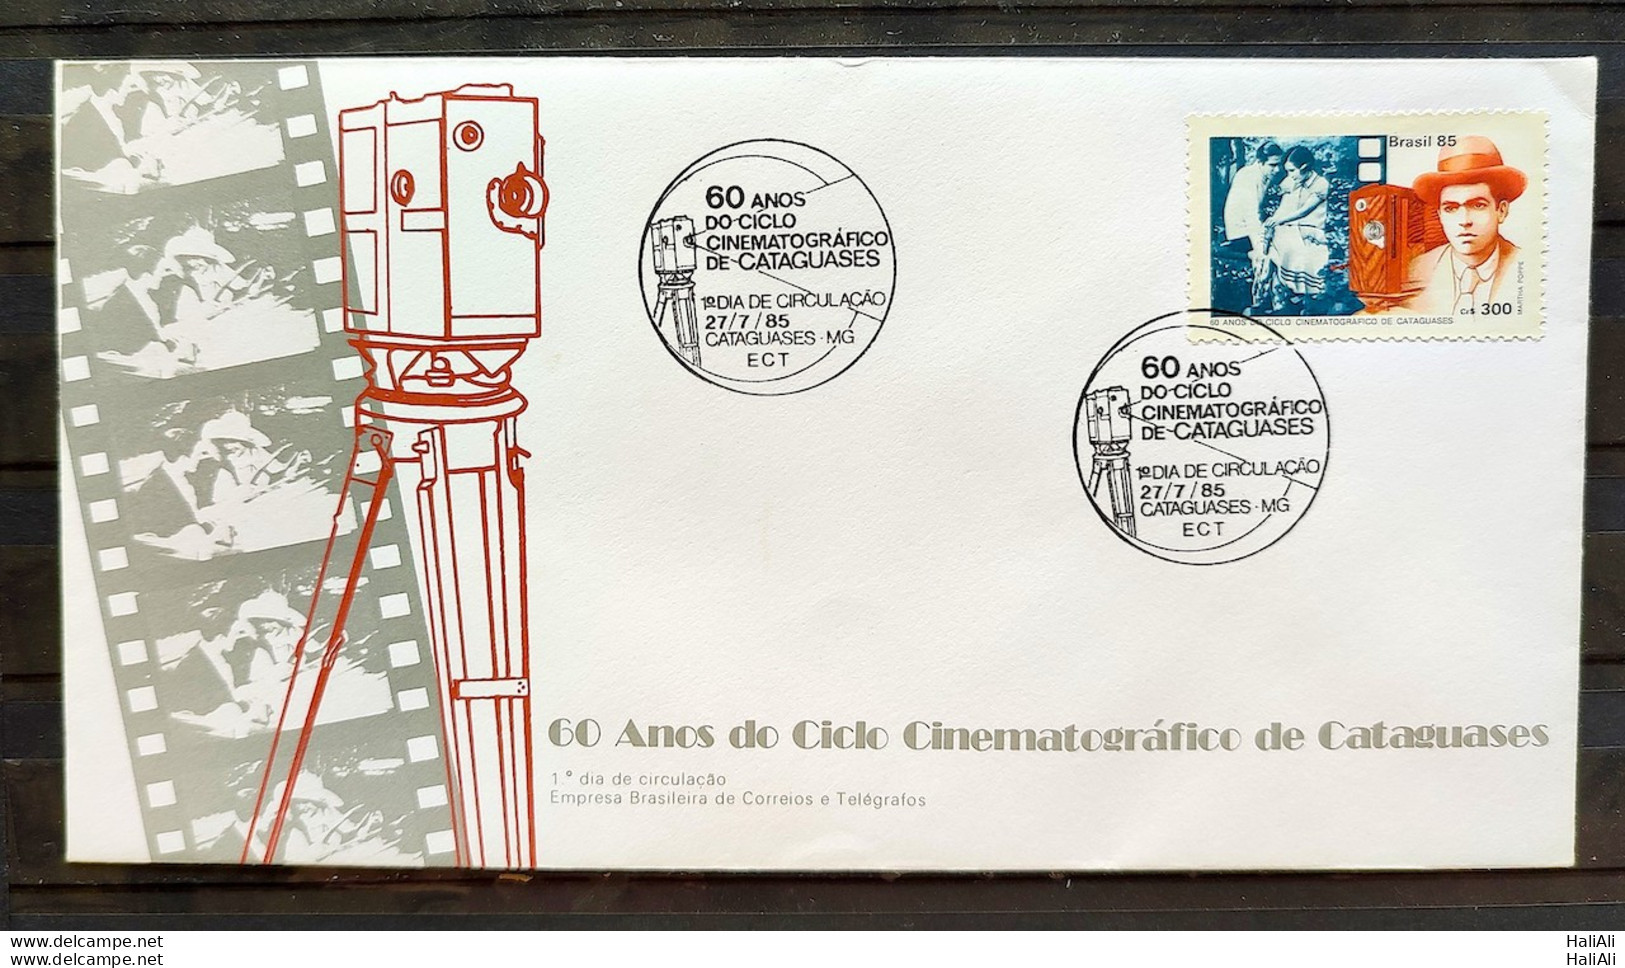 Brazil Envelope FDC 369 1985 Cinema Cataguases Art CBC MG 03 - FDC